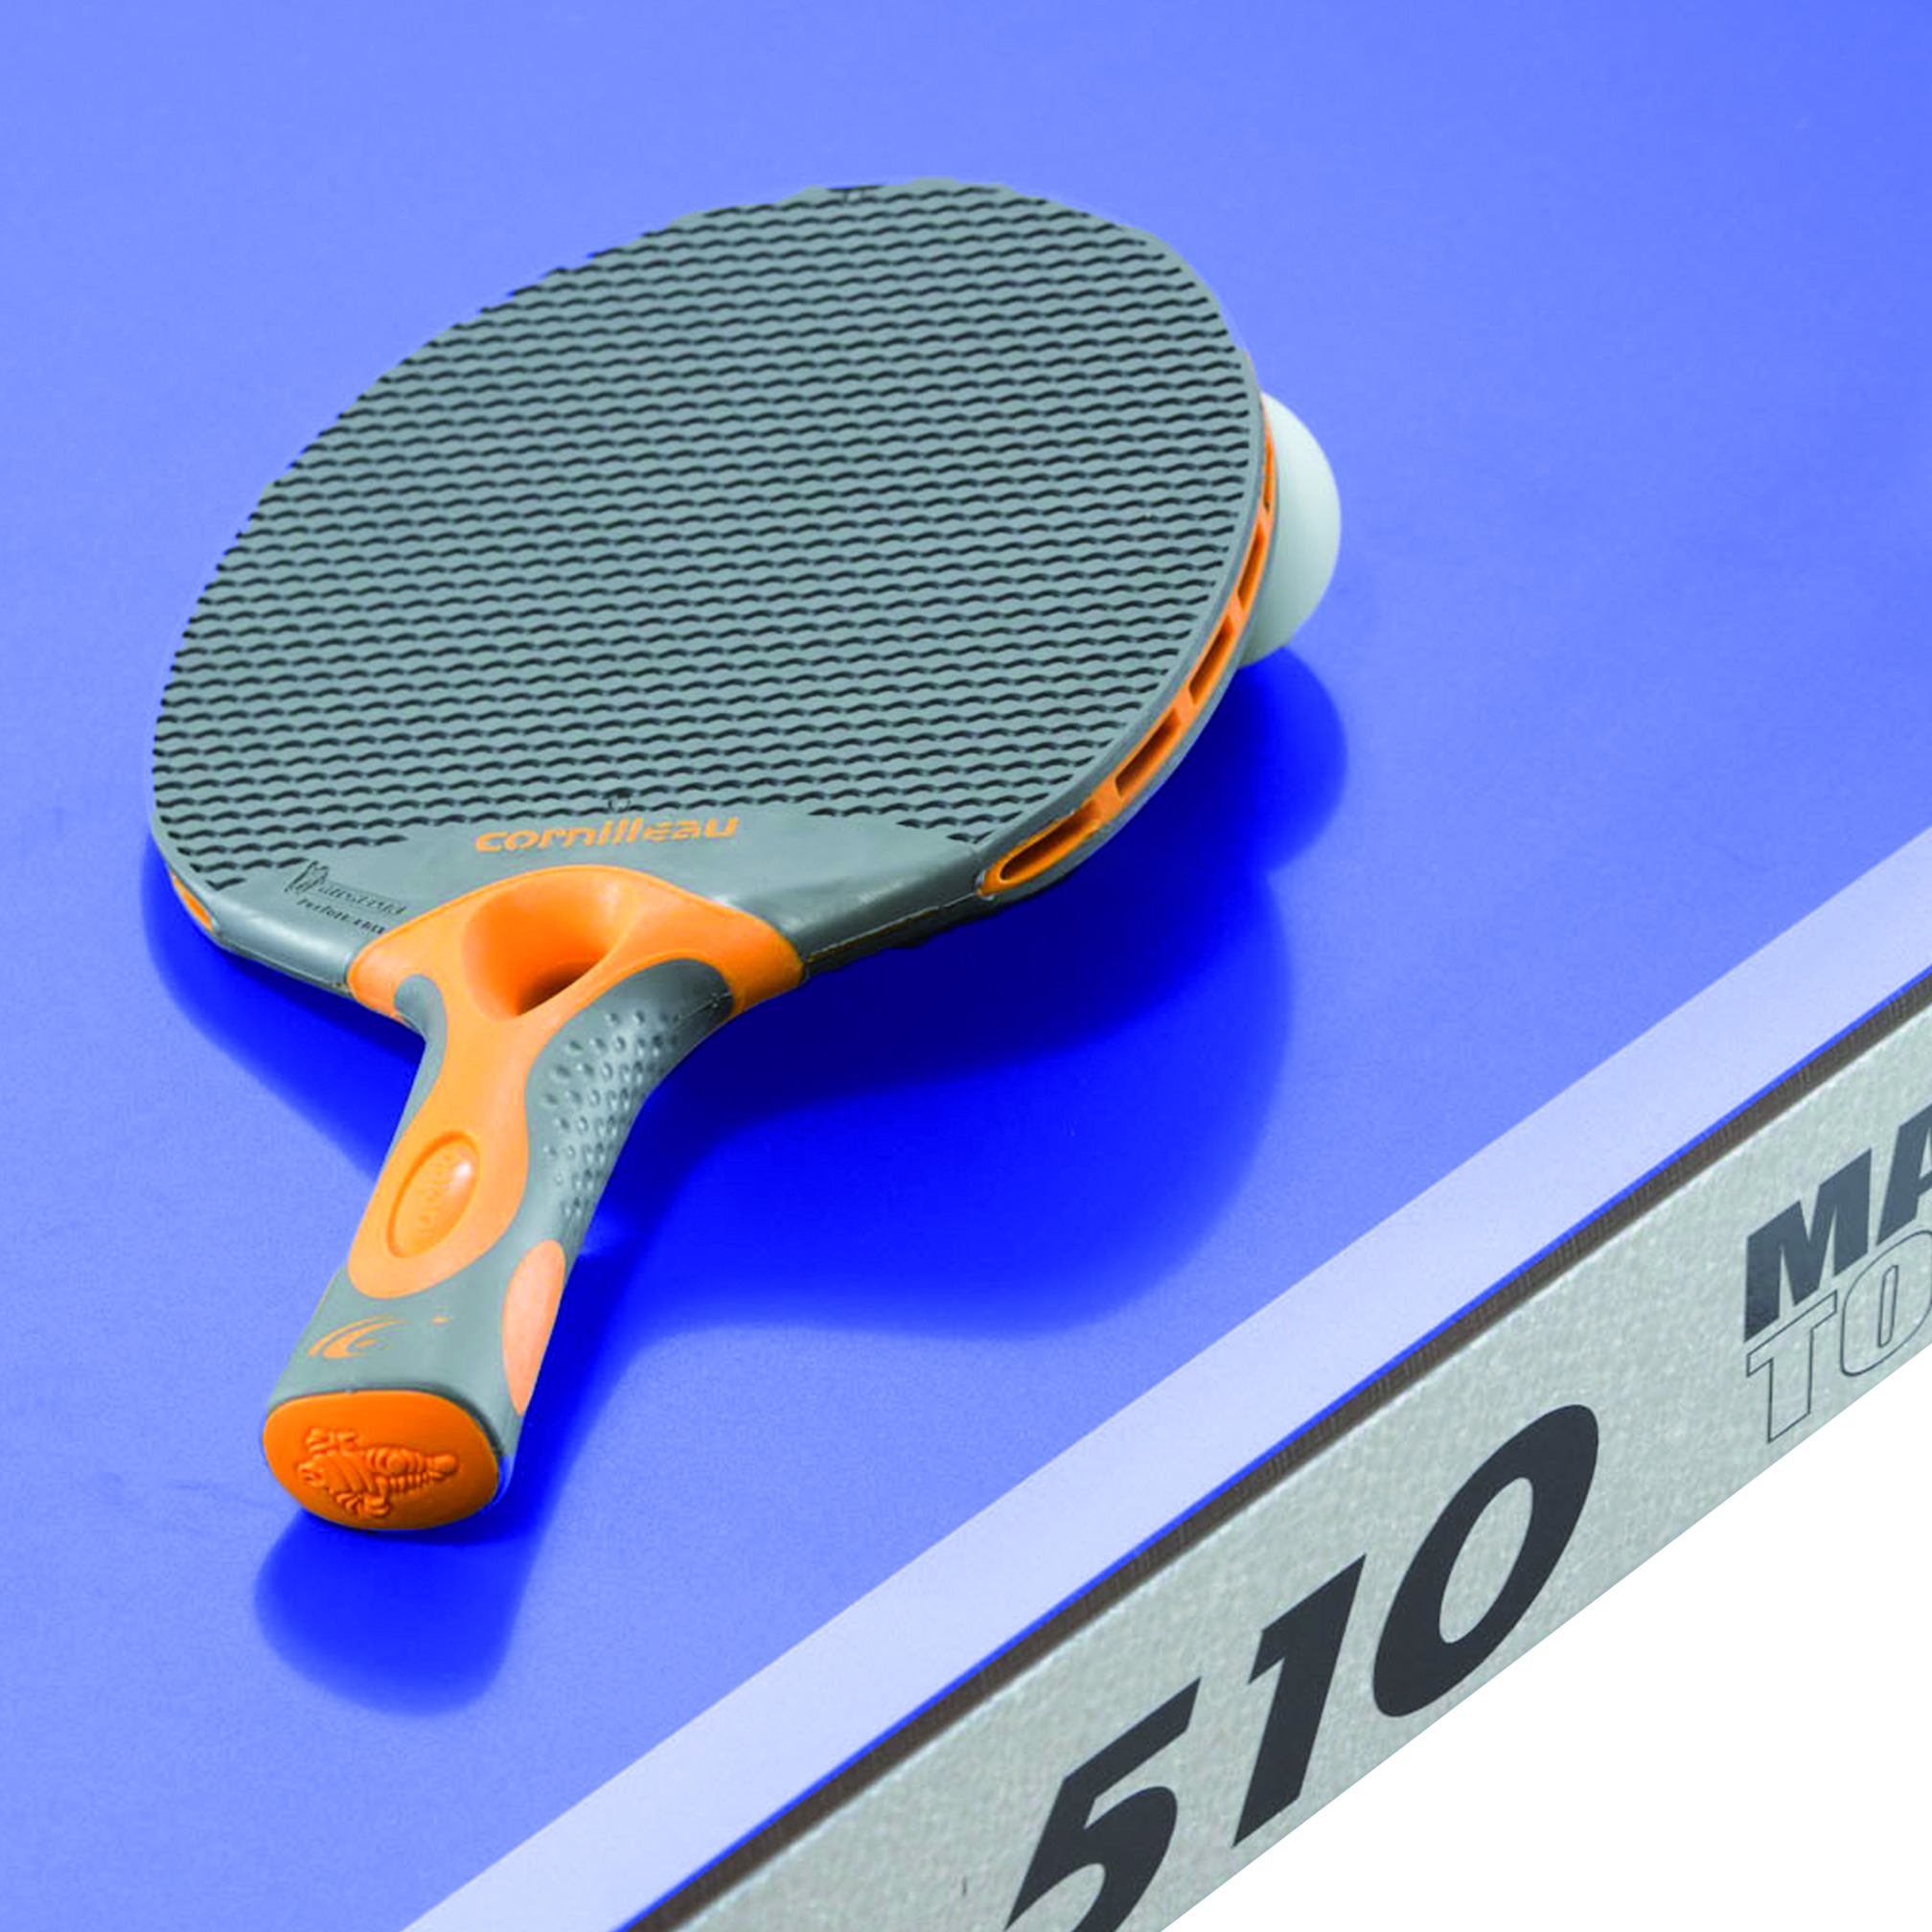 Table tennis table Cornilleau Pro 510